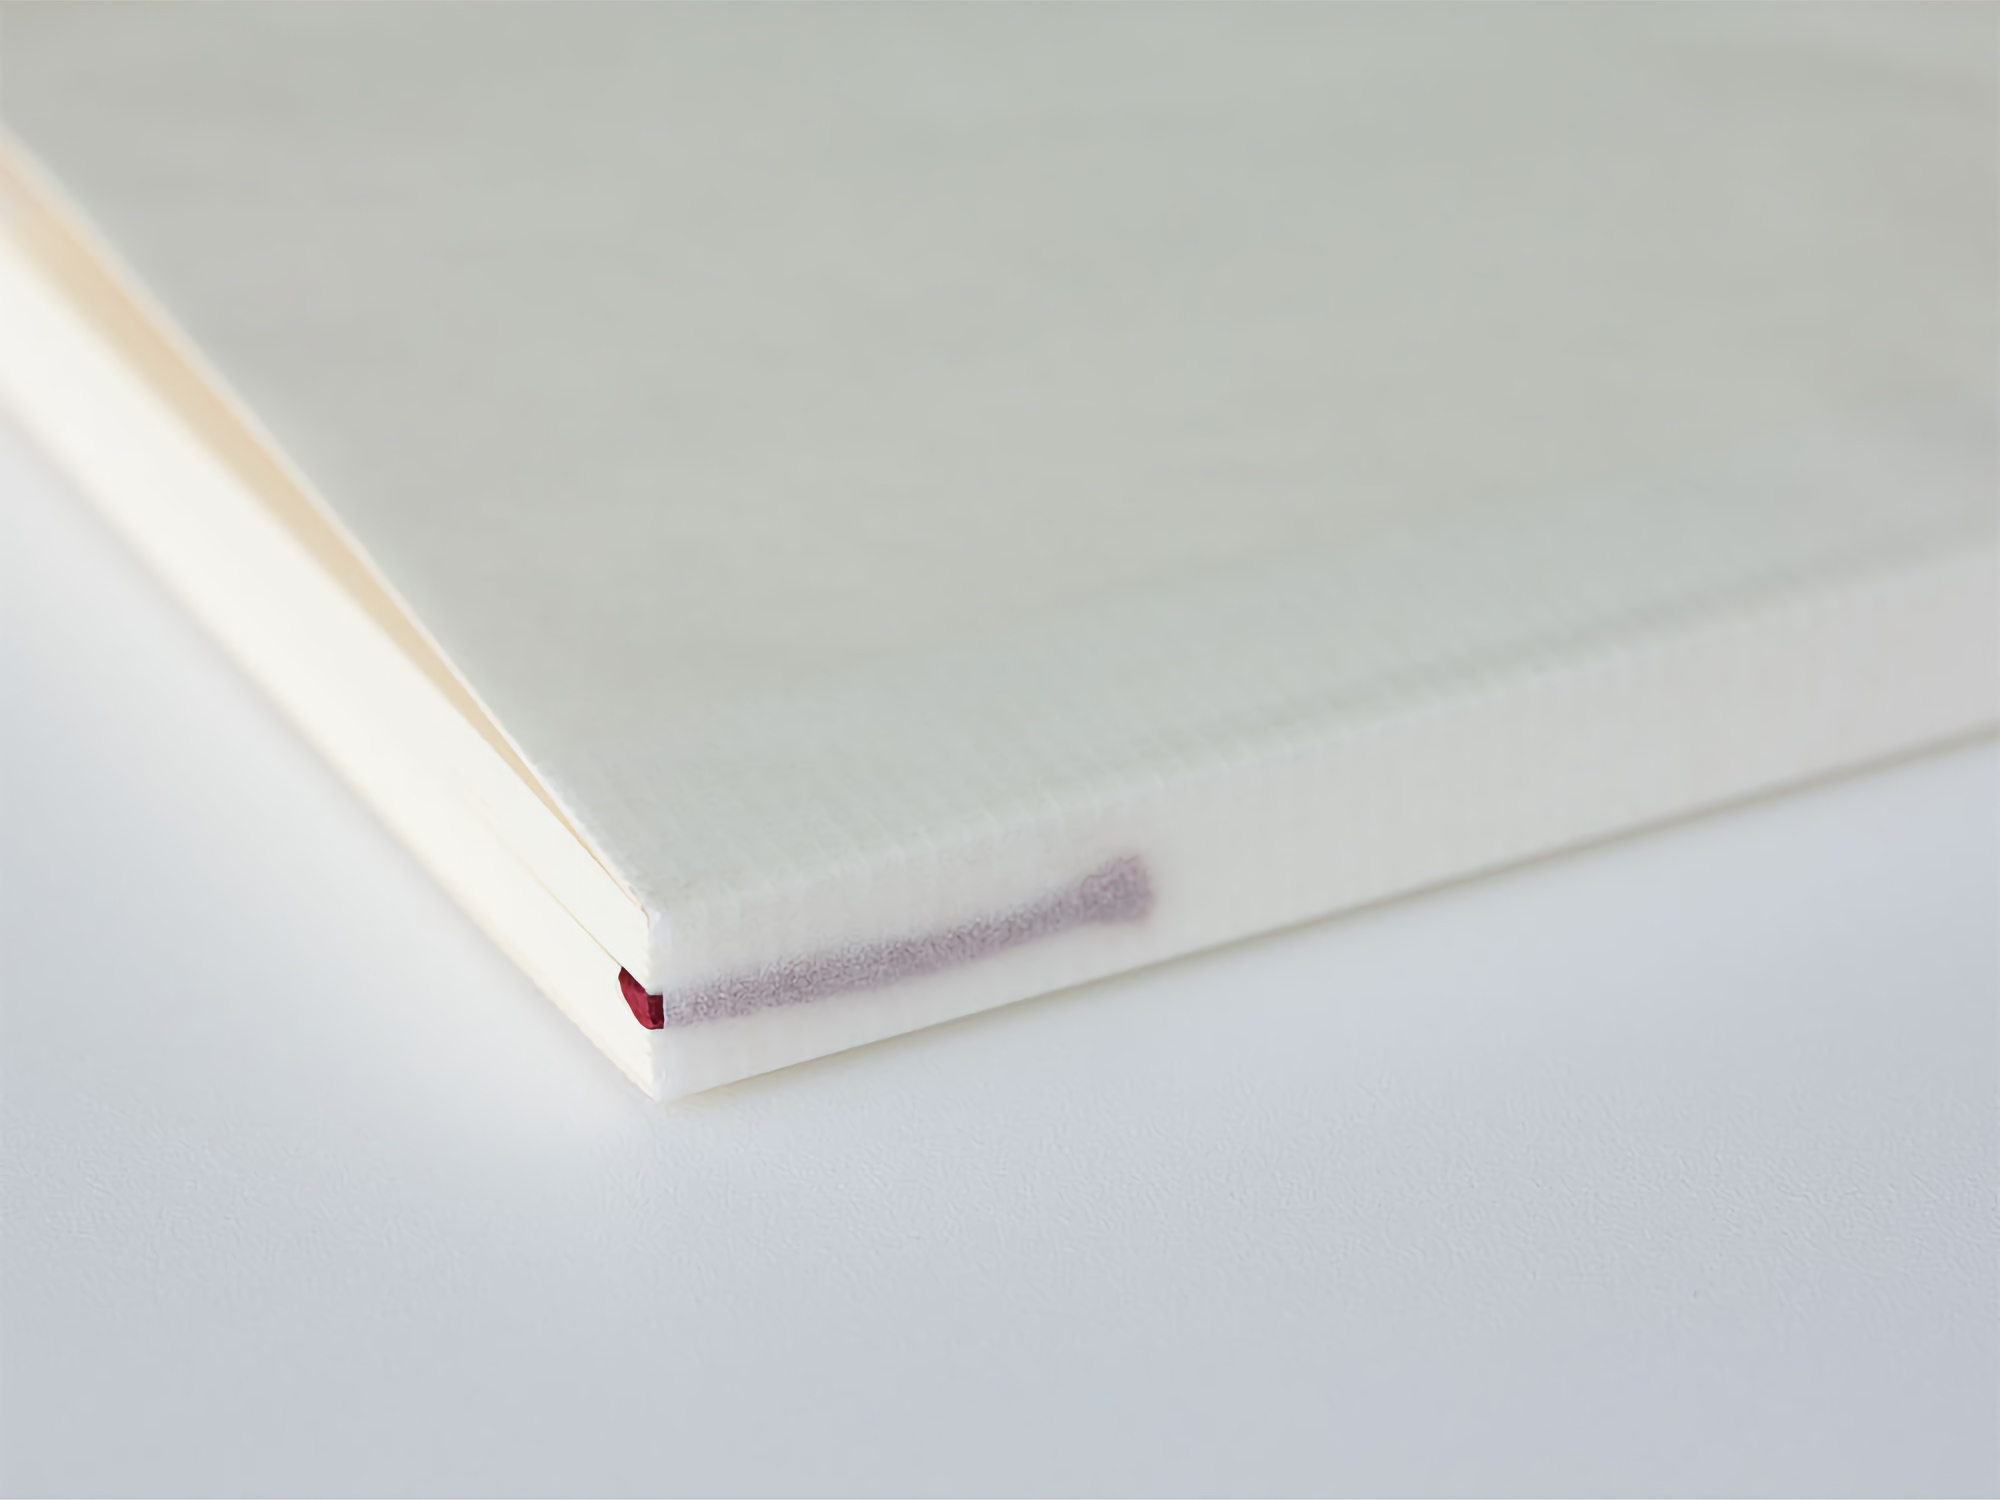 Midori MD Notebook [A4] Blank